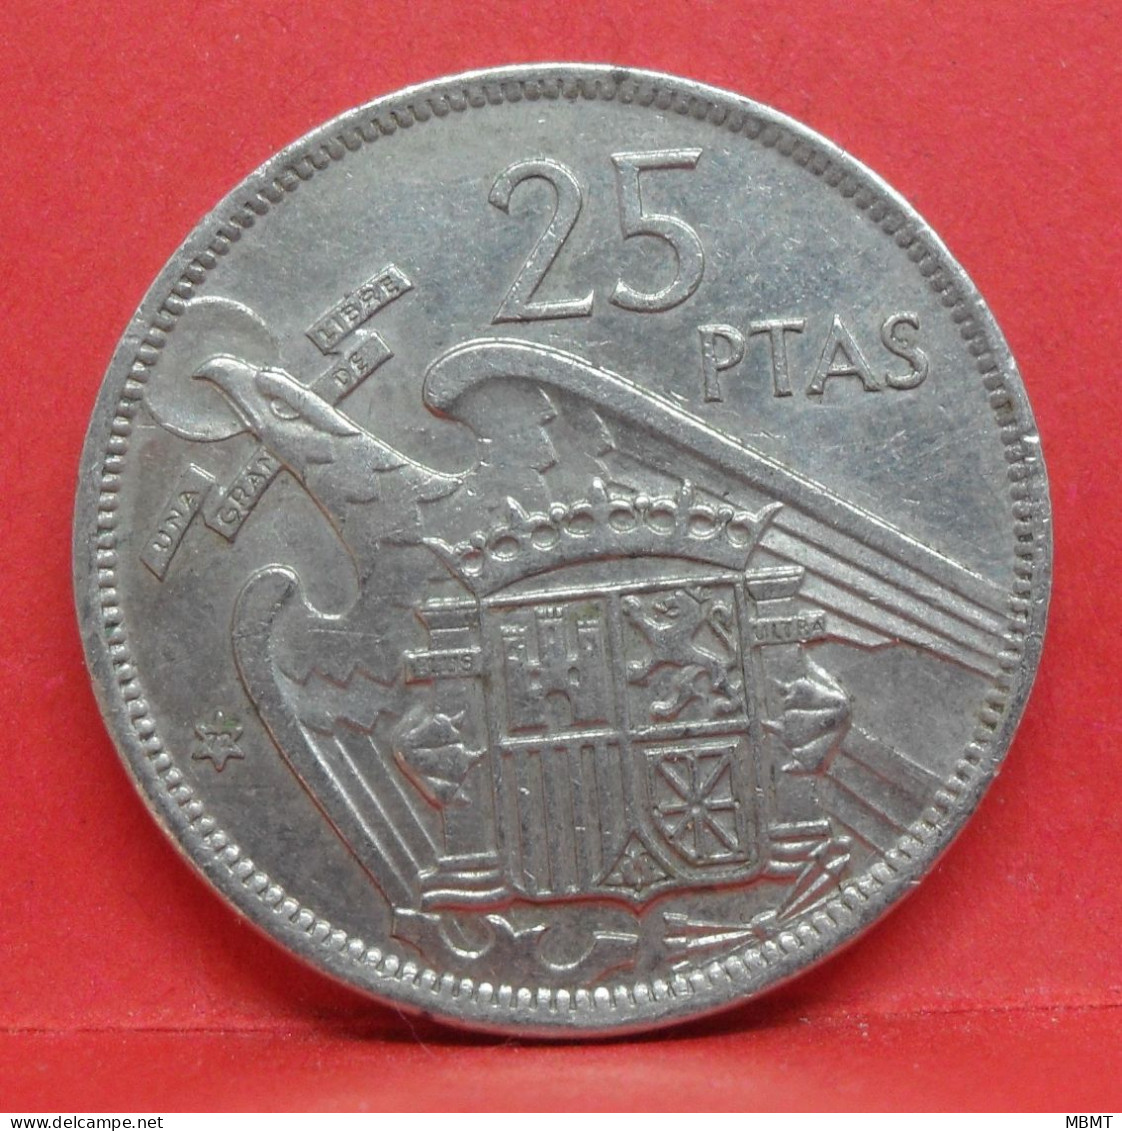 25 Pesetas 1957 étoile 72 - SUP - Pièce Monnaie Espagne - Article N°2444 - 25 Pesetas